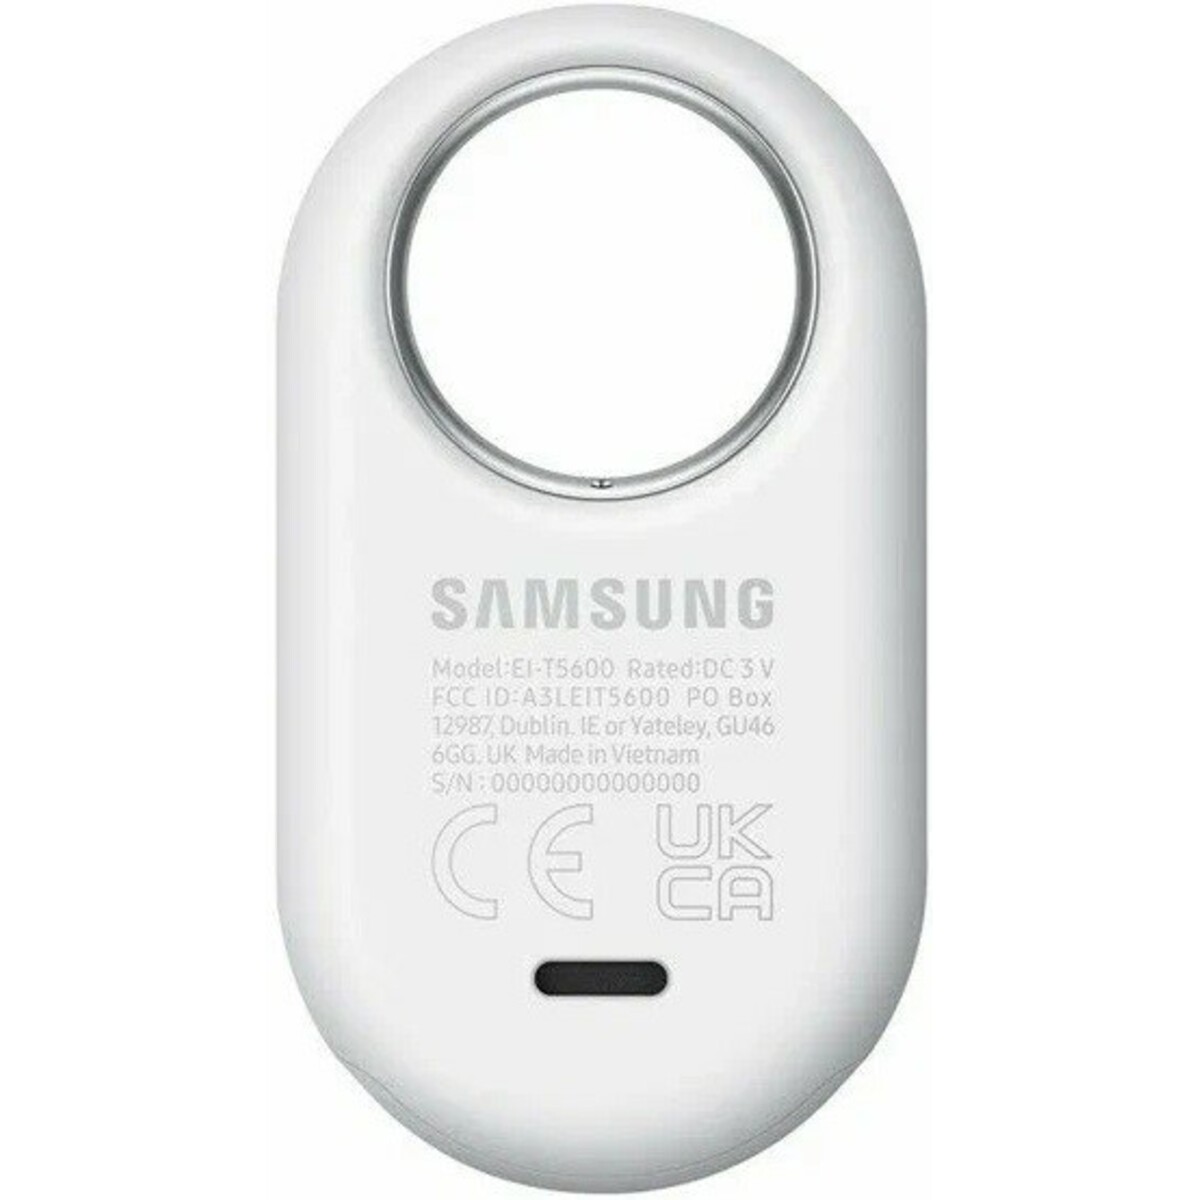 Метка Samsung Galaxy SmartTag2, белый